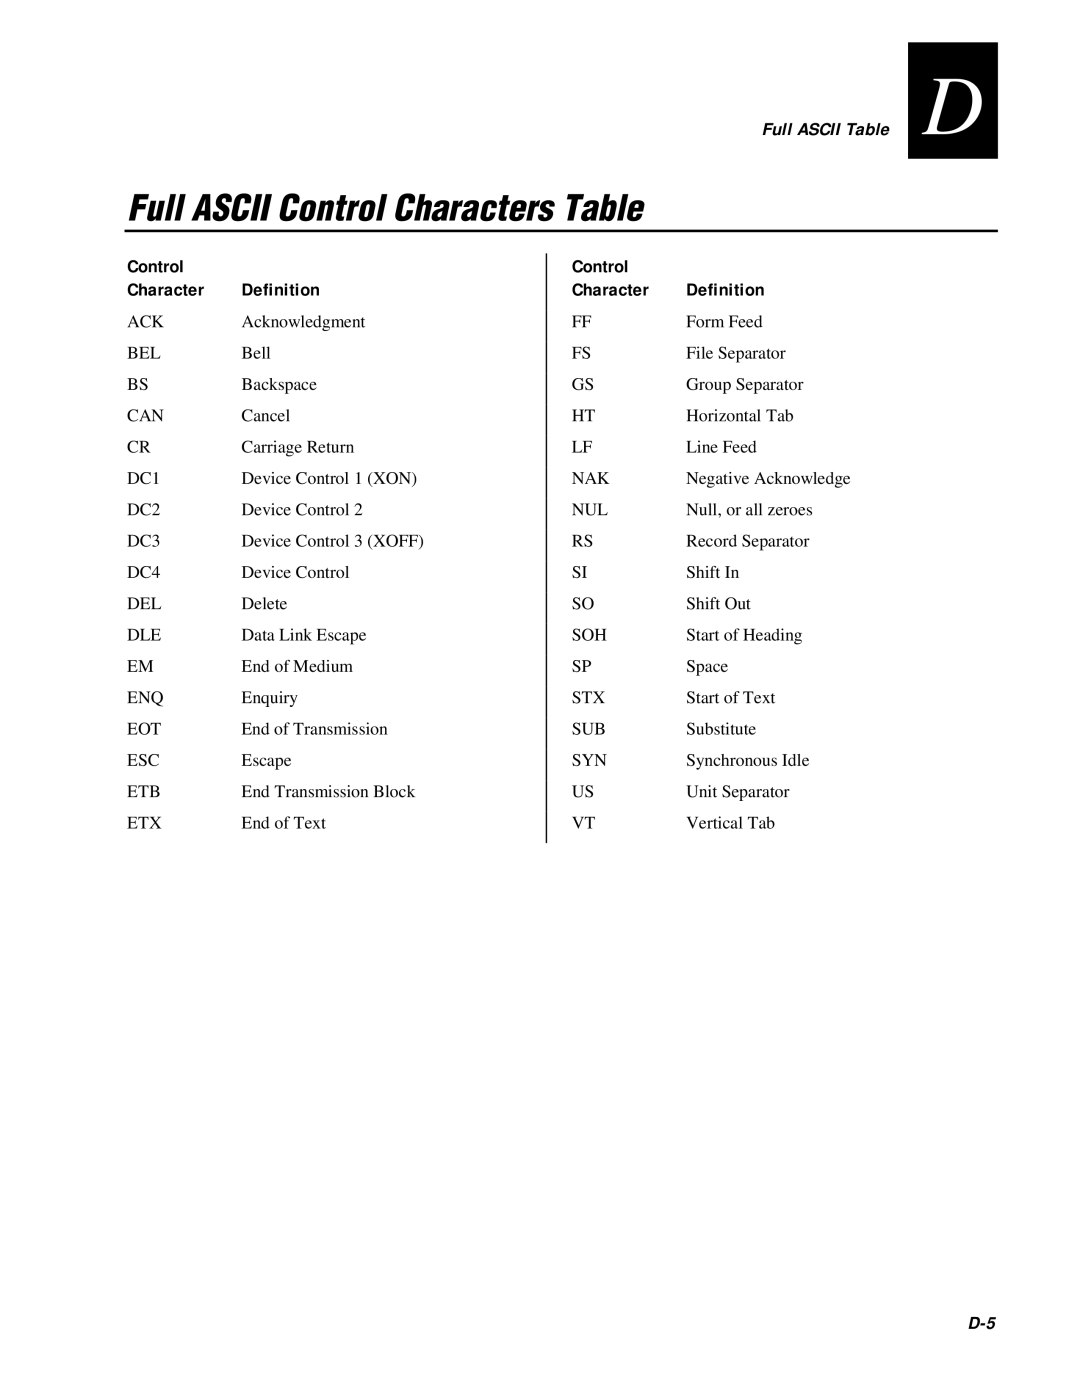 IBM EasyCoder 3400e user manual Full ASCII Control Characters Table, Full ASCII Table, Definition 